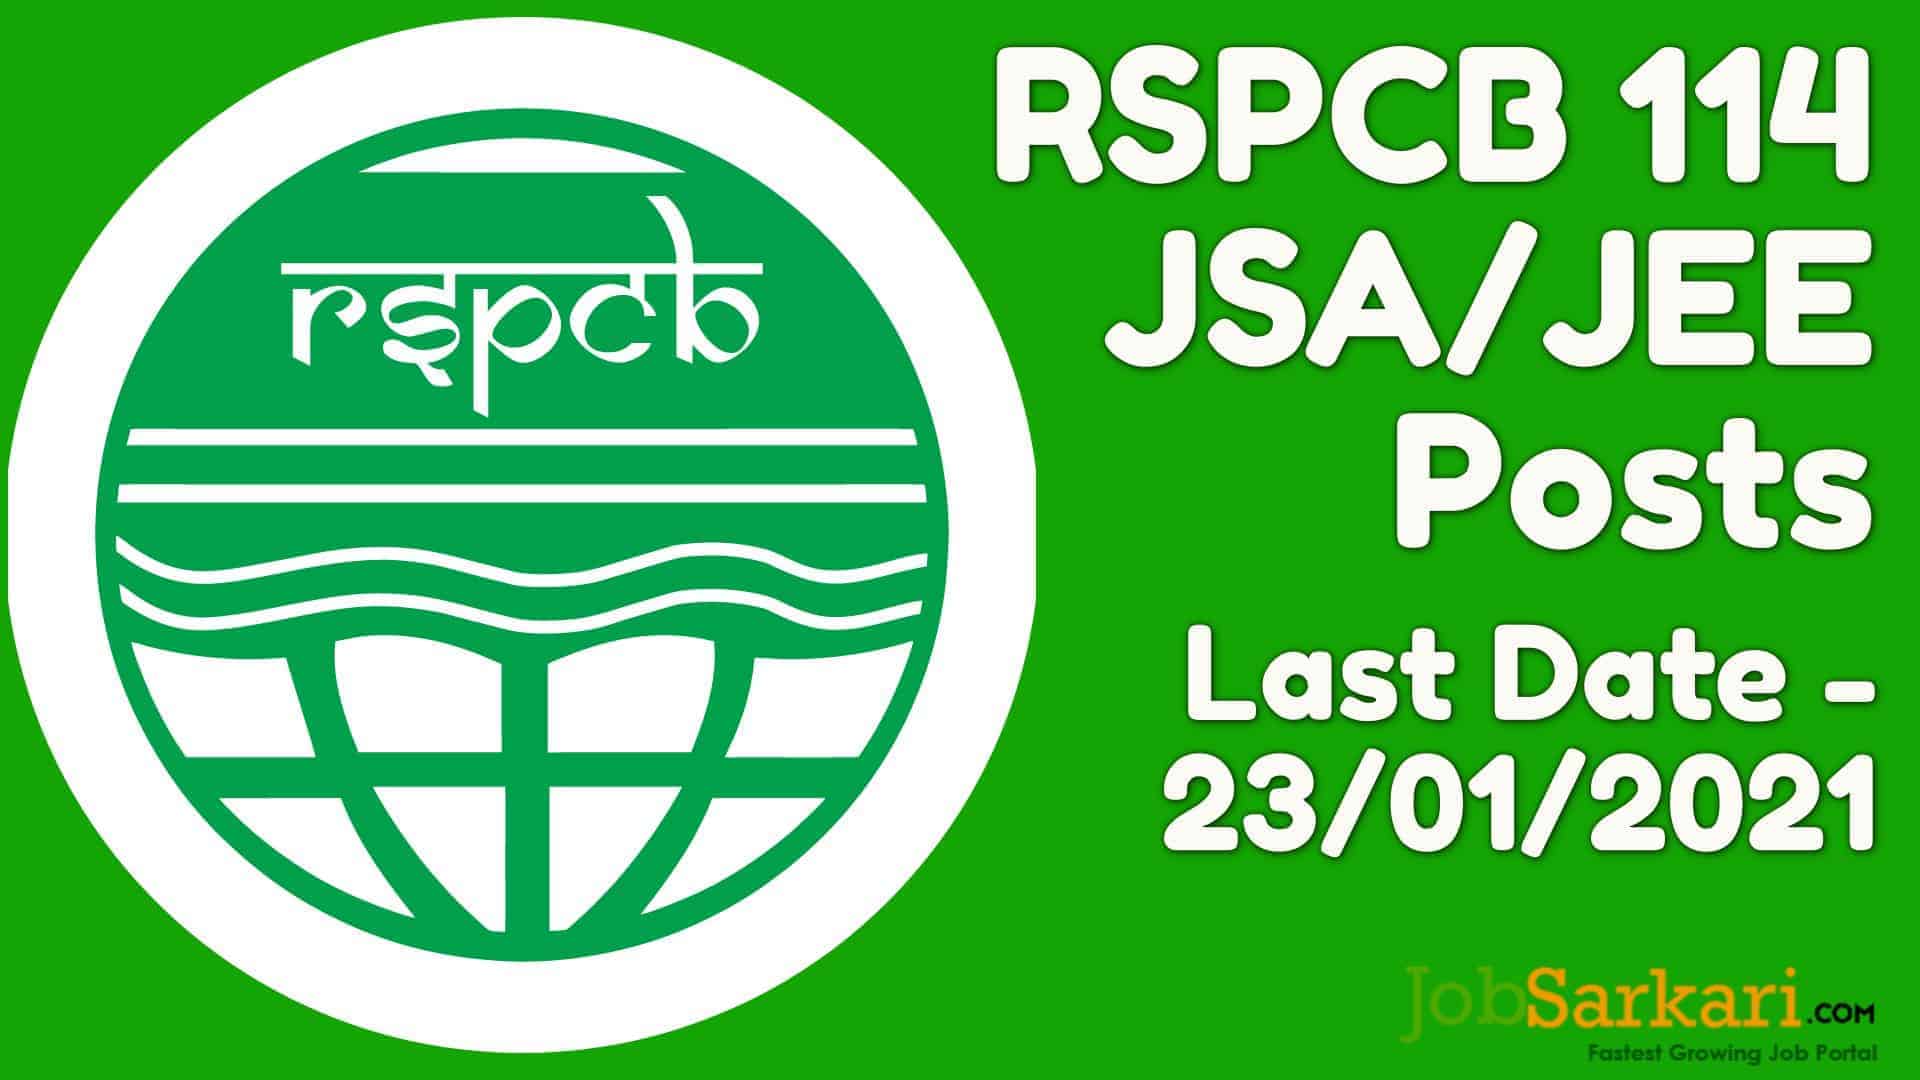 RSPCB 114 JSA/JEE Posts